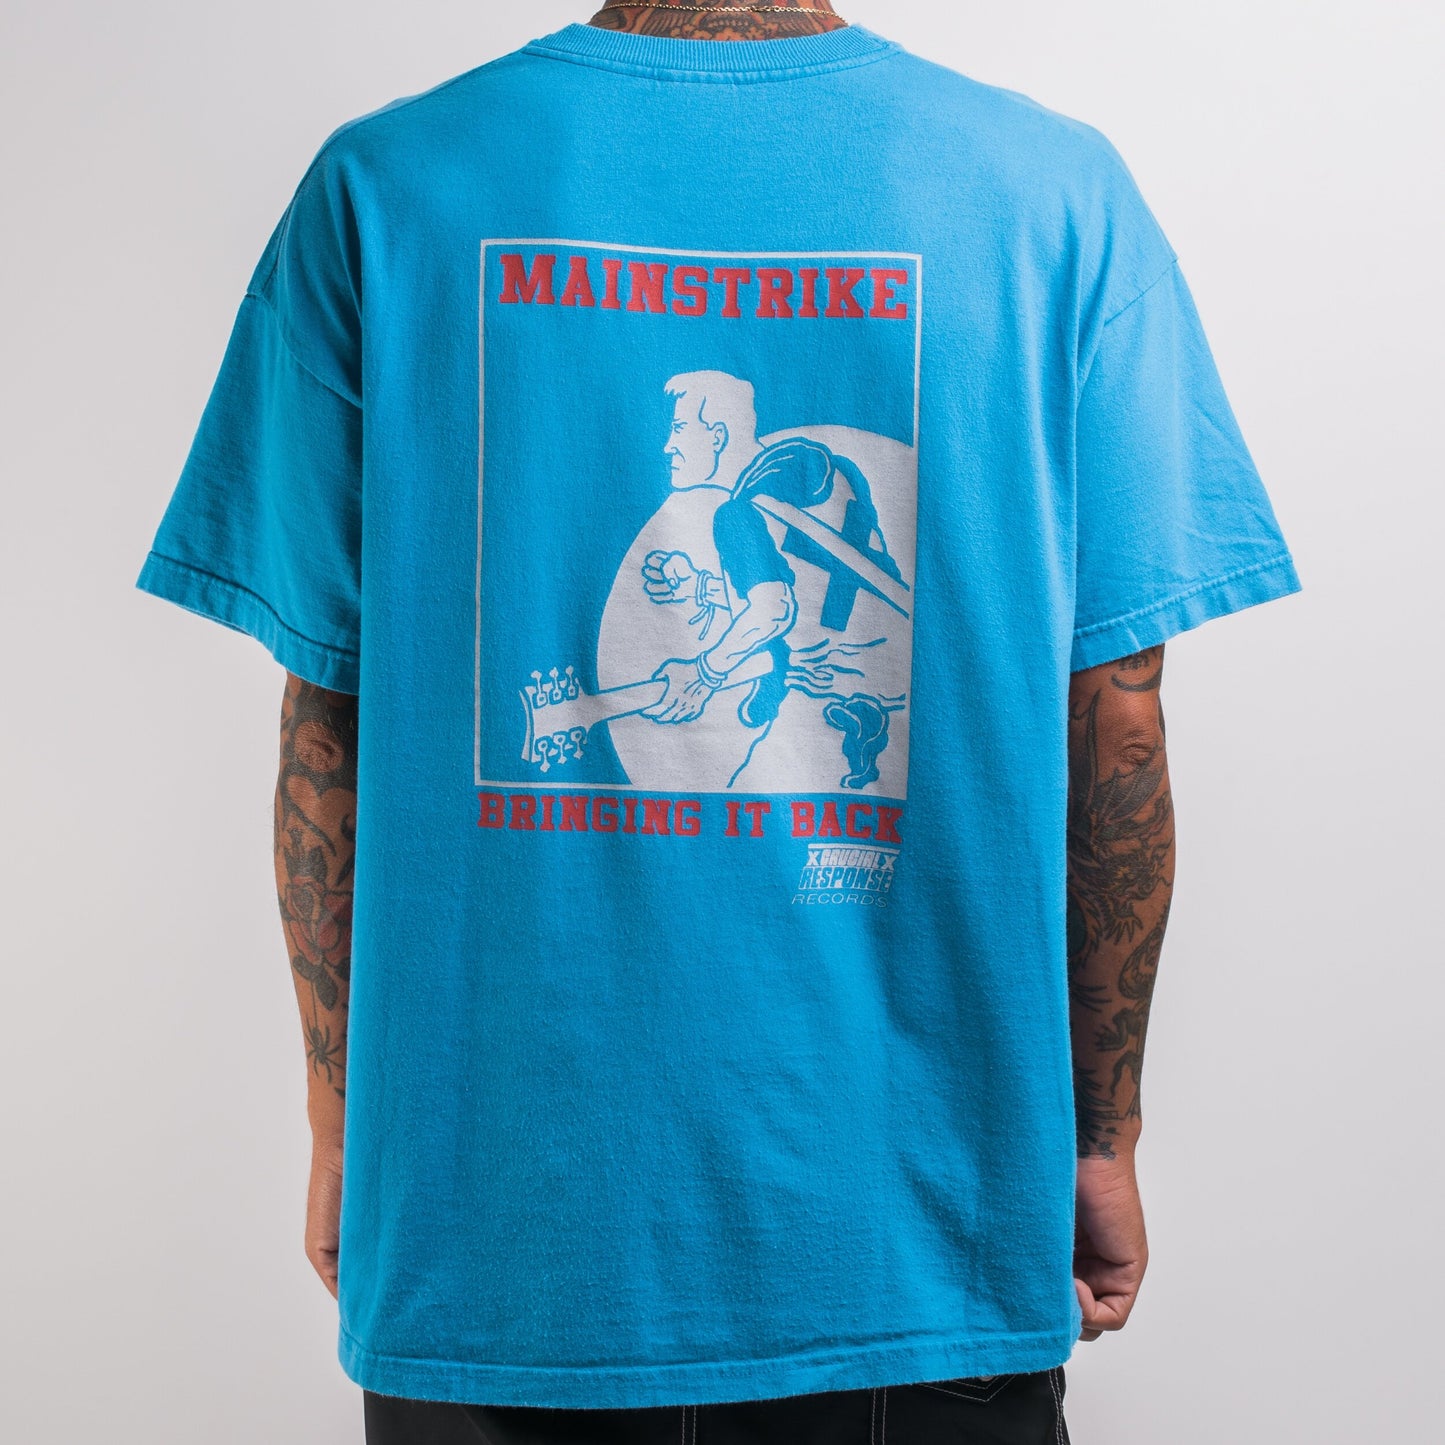 Vintage 90’s Mainstrike Bringing It Back T-Shirt